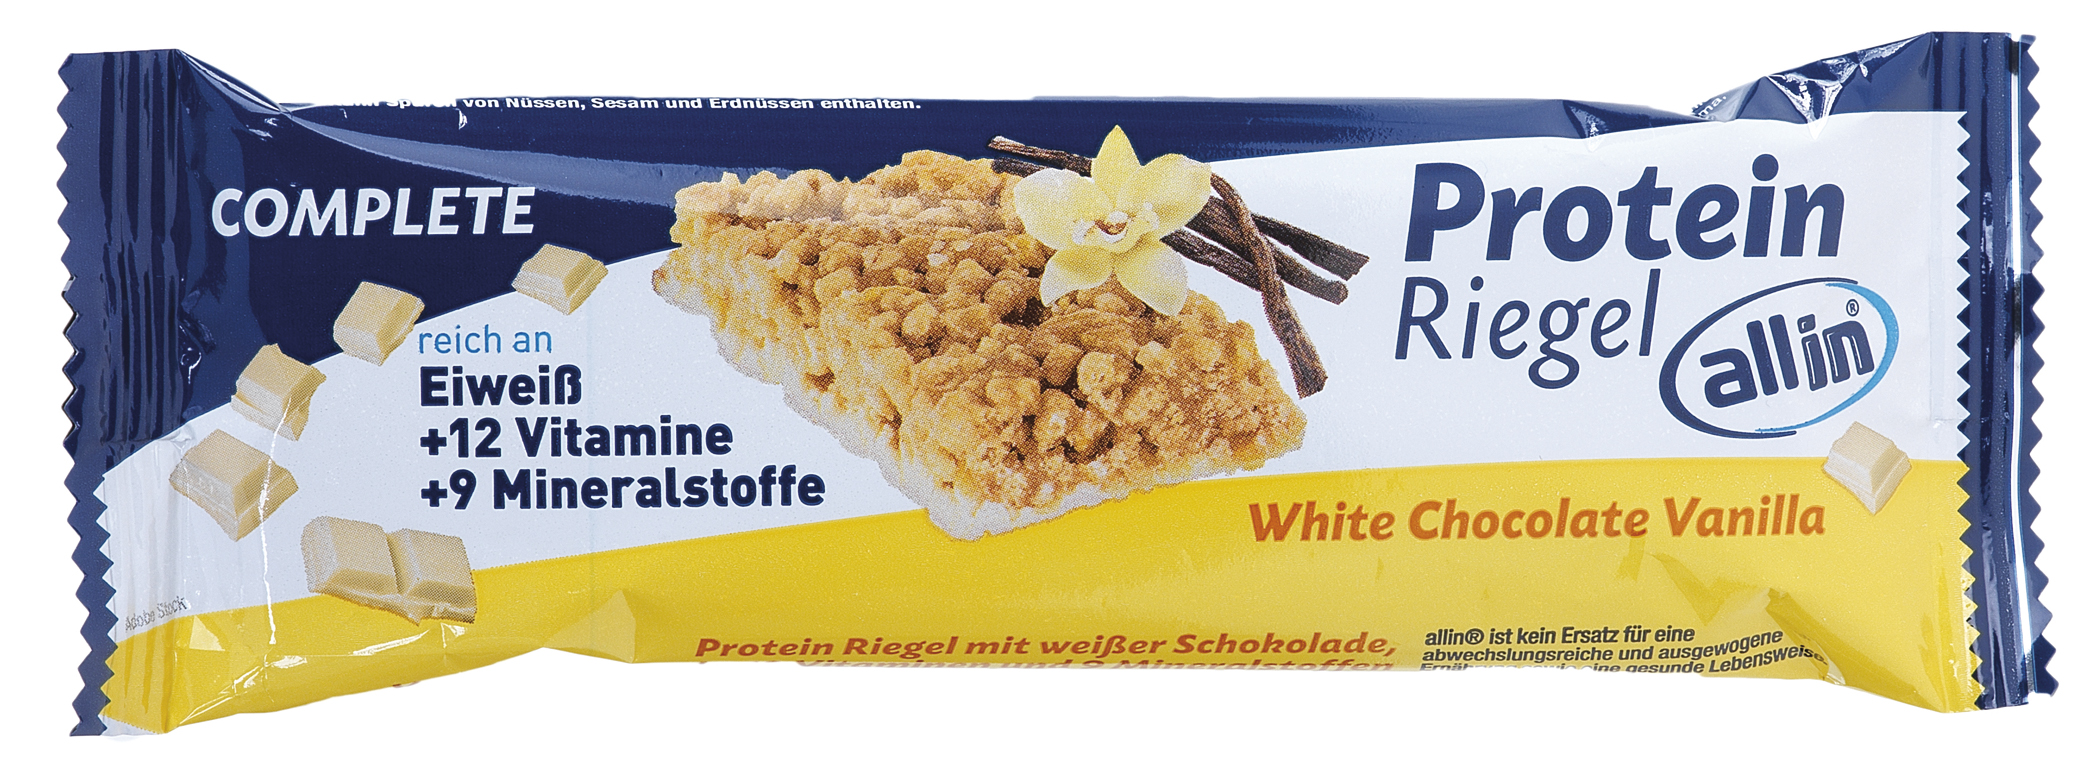 all in® COMPLETE Protein Riegel White Chocolate Vanilla (25 x 40g)